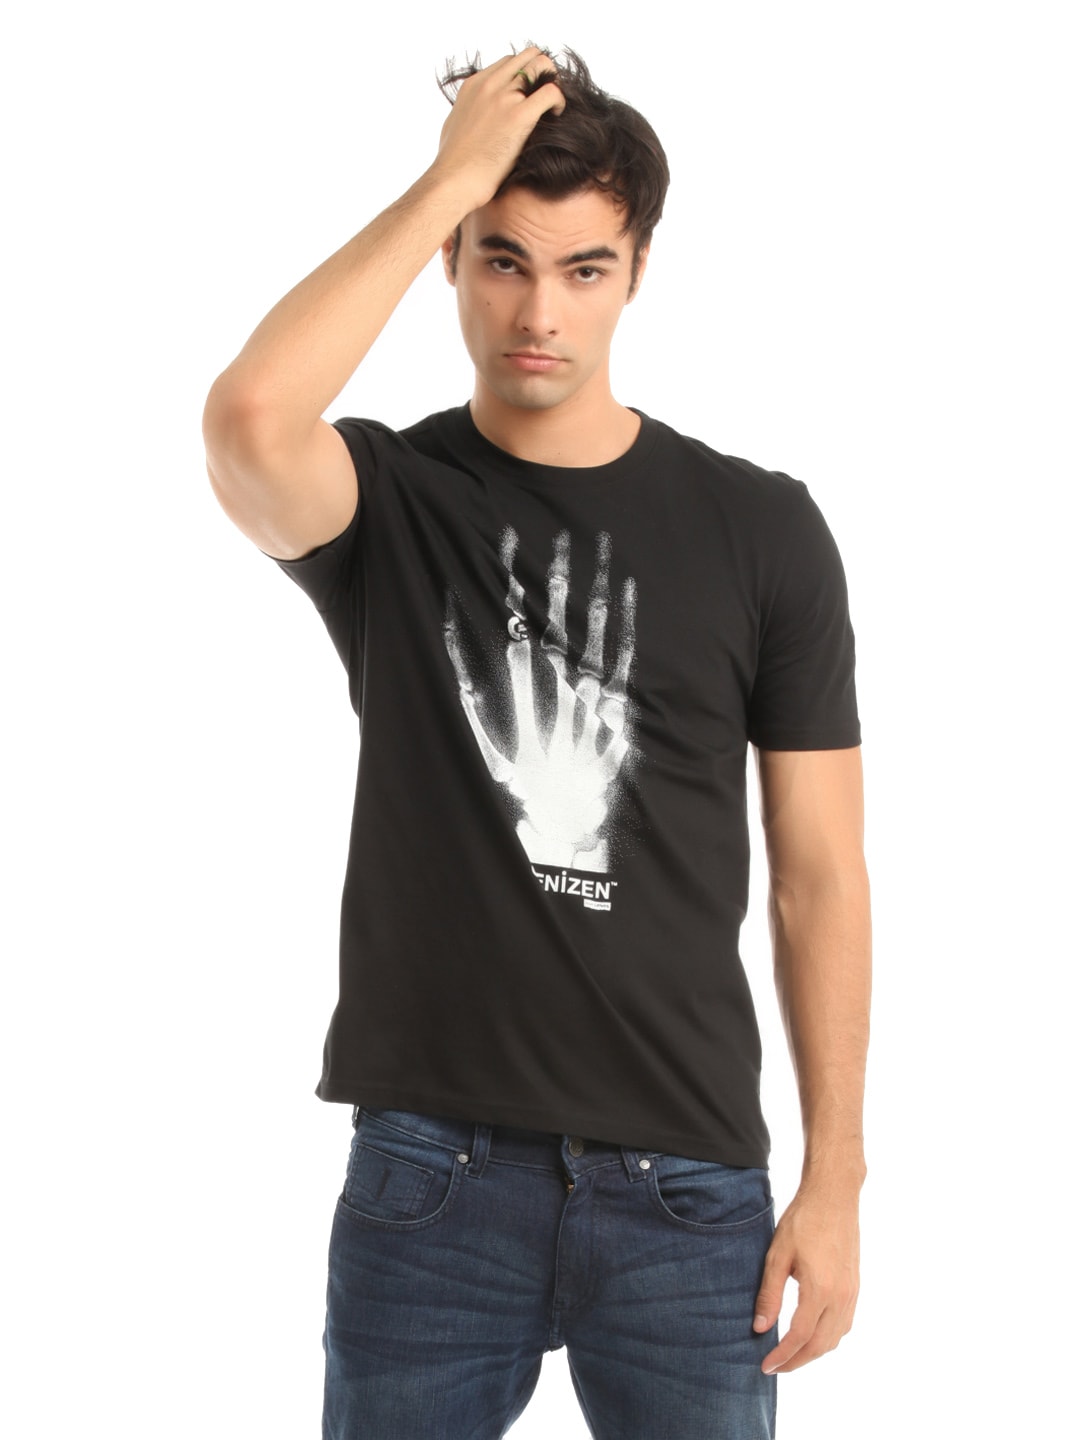 Denizen Men Black Printed T-shirt